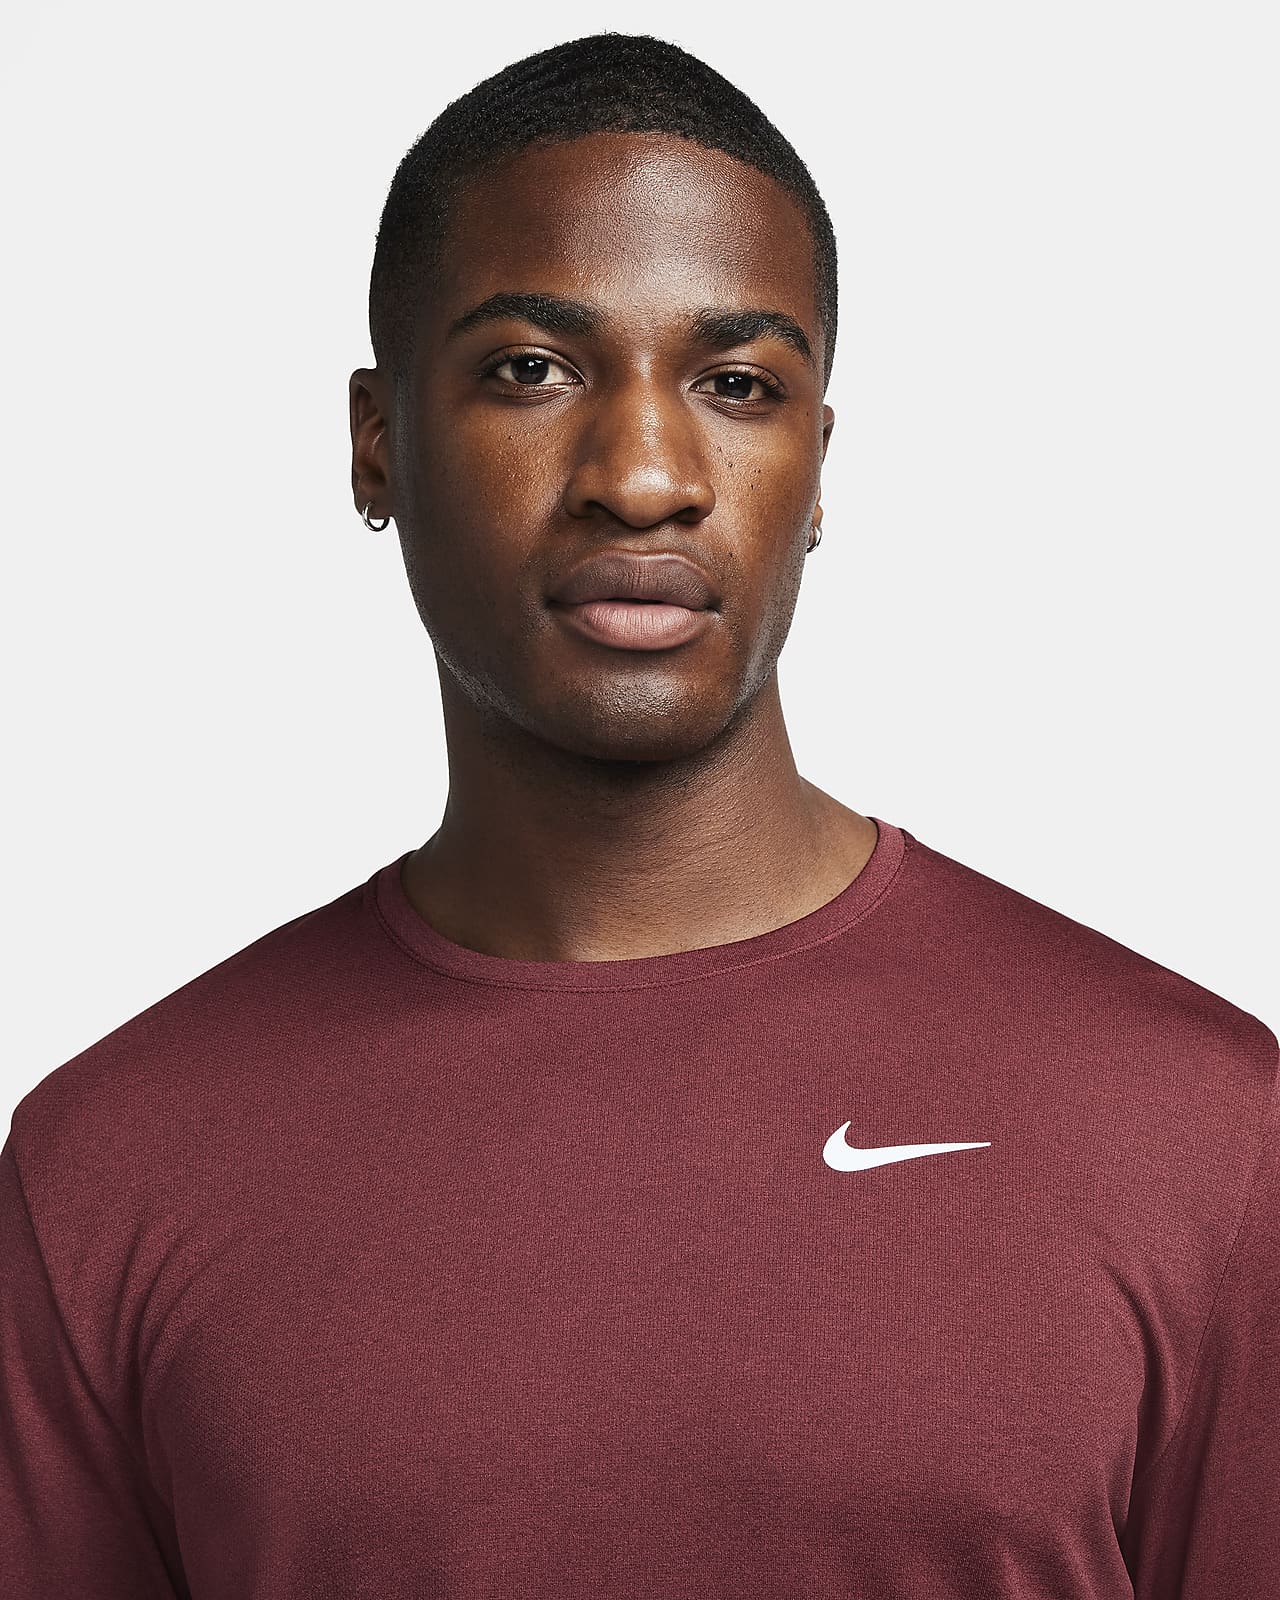 Nike Men's Dri-FIT UV Miler Long Sleeve Shirt